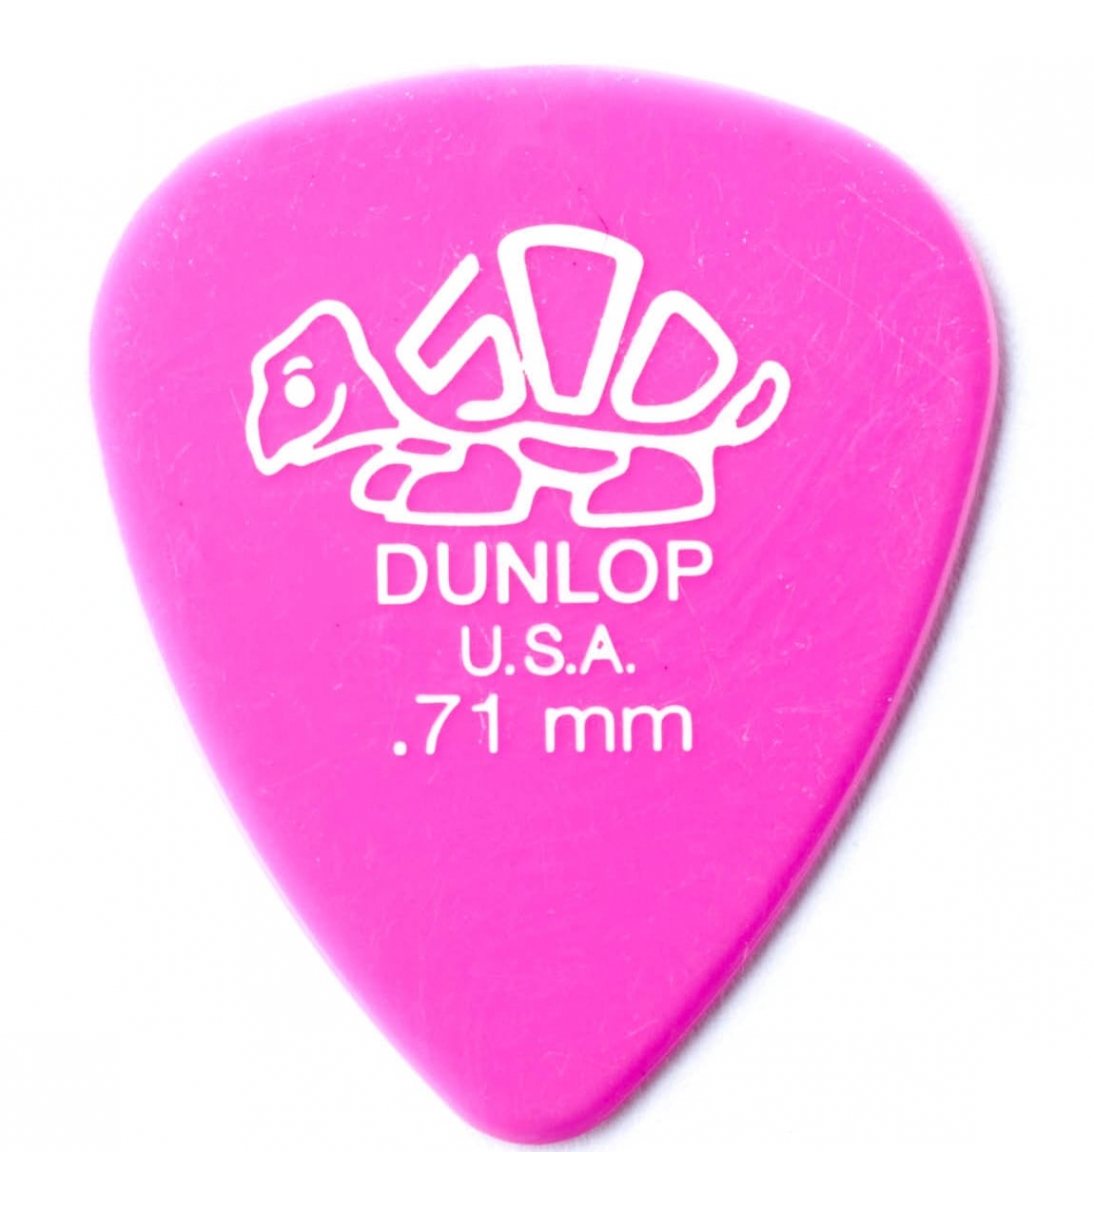 Dunlop Delrin 500 plettro rosa 0,71 mm